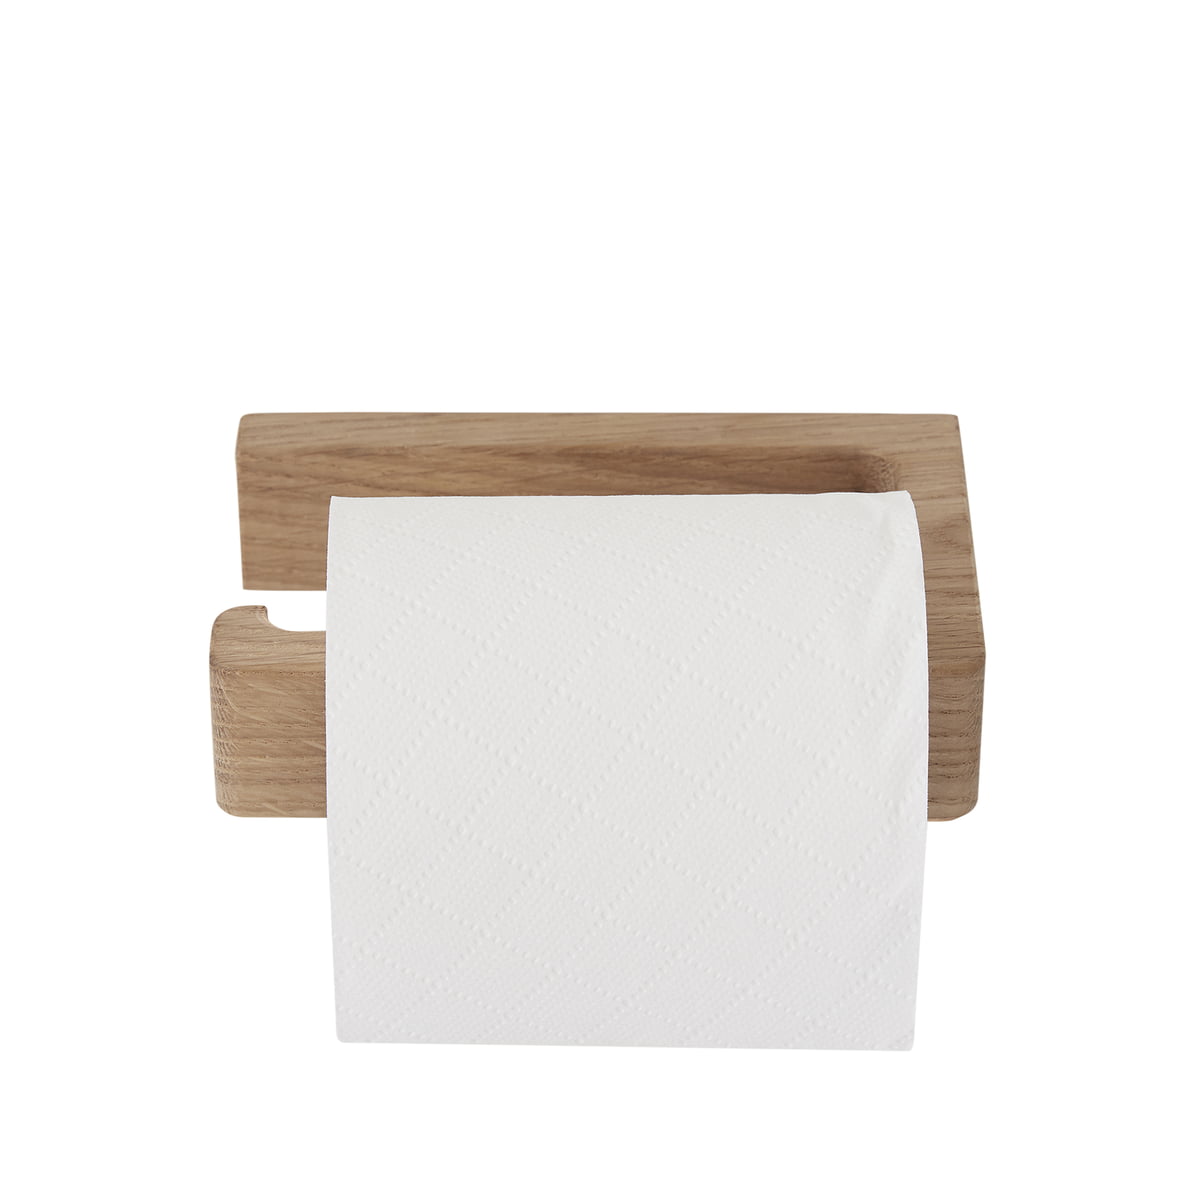 https://cdn.connox.com/m/100030/250548/media/Andersen-Furniture/Toilettenpapierhalter/Andersen-Furniture-Toilettenpapierhalter-Eiche-01-frei.jpg